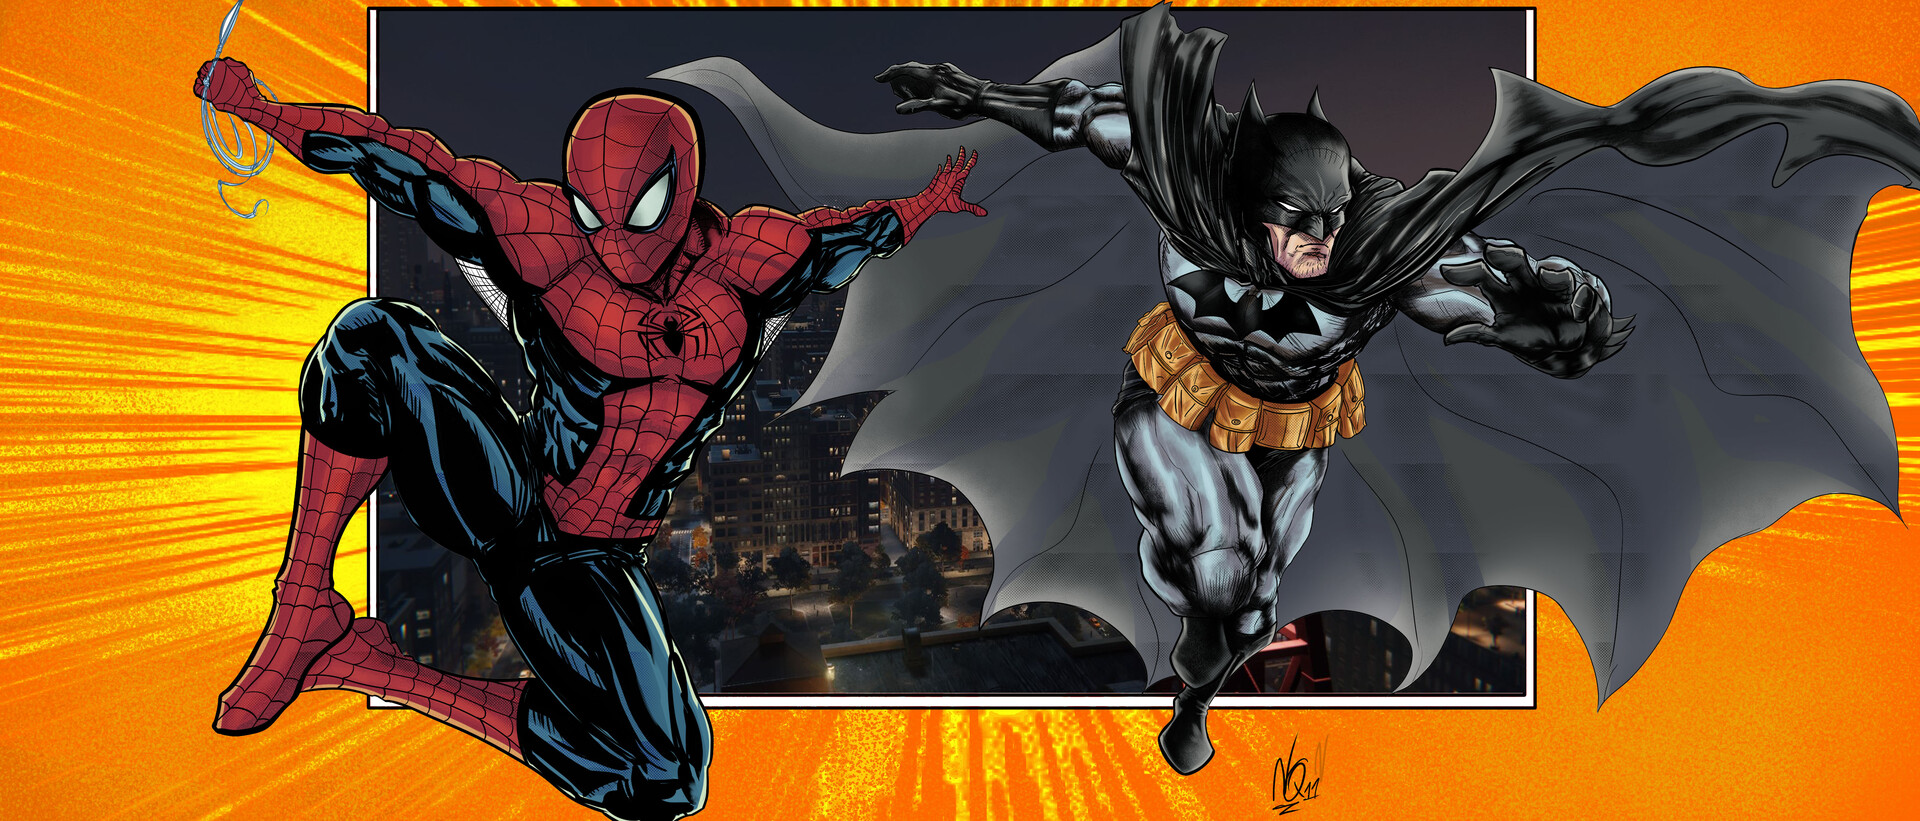 Wallpaper ID 80002  spiderman batman superman hd superheroes  artwork digital art behance free download